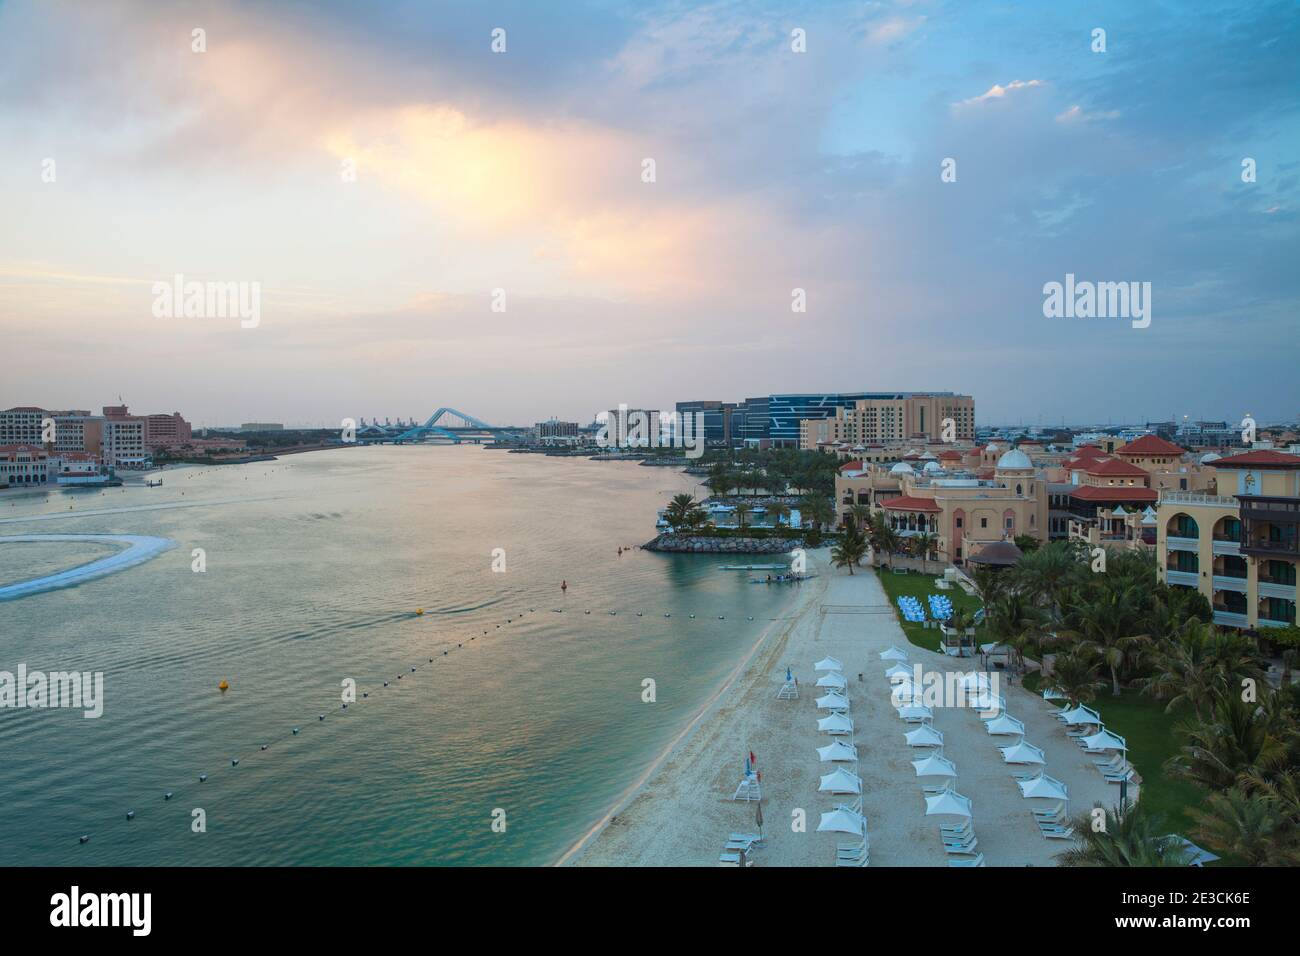 United Arab Emirates, Abu Dhabi, Khor Al Maqta, View of Canal and Shangri-La hotel, Stock Photo